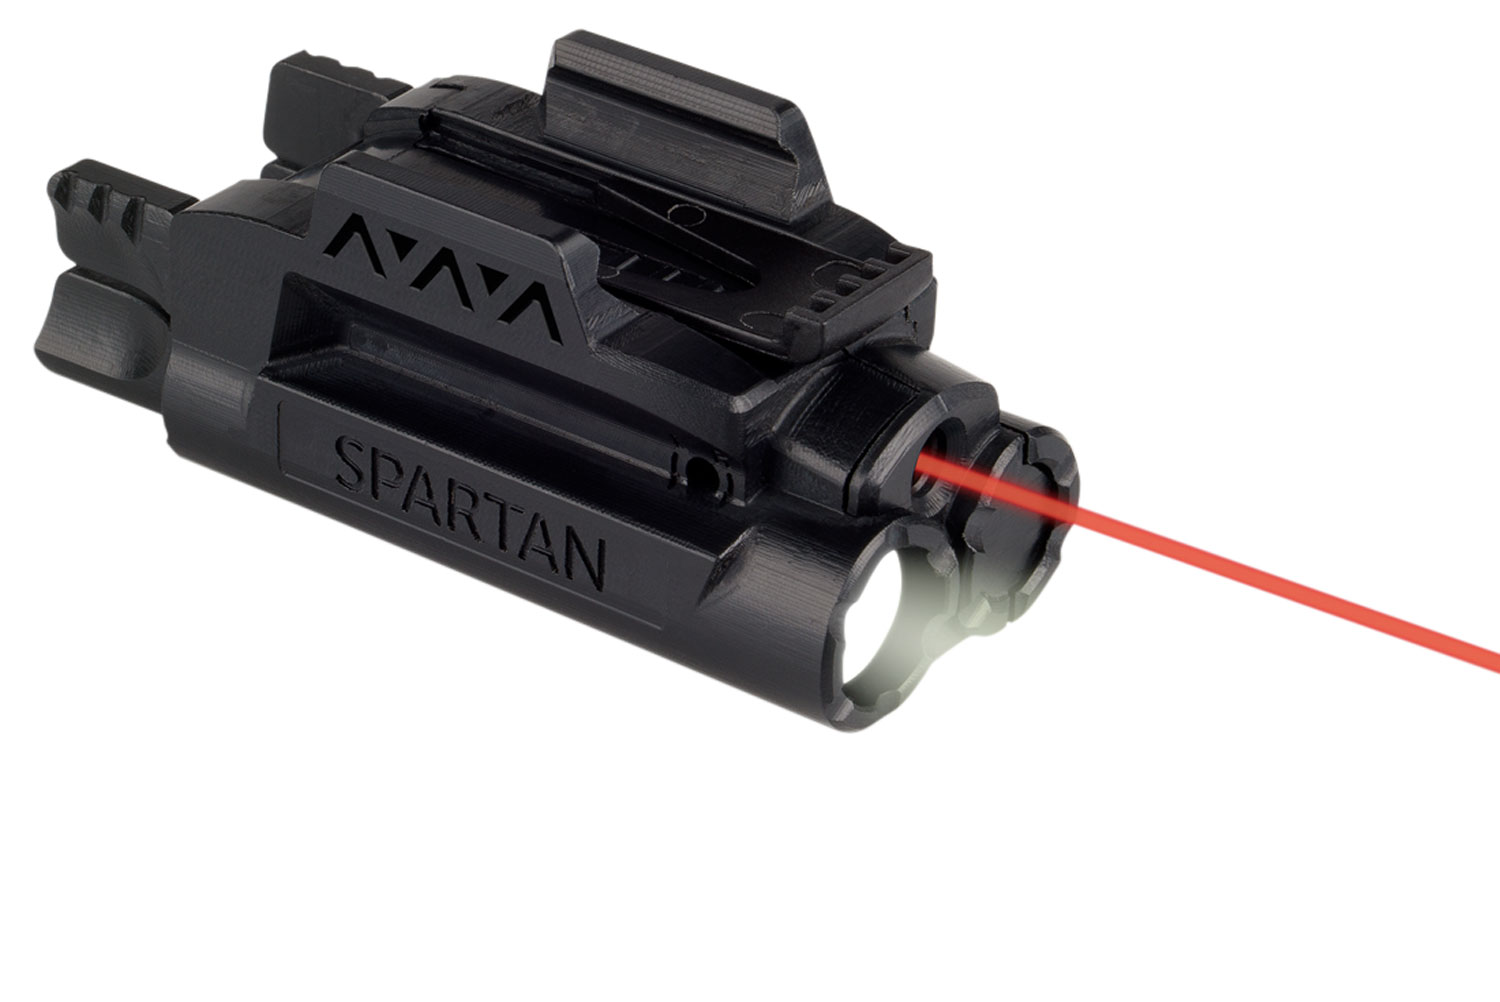 LaserMax SPSCR Spartan Laser/Light Combo 5mW Red Laser with 650nM Wavelength, 120 Lumens White LED Light Black Finish for Rail-Equipped Handgun